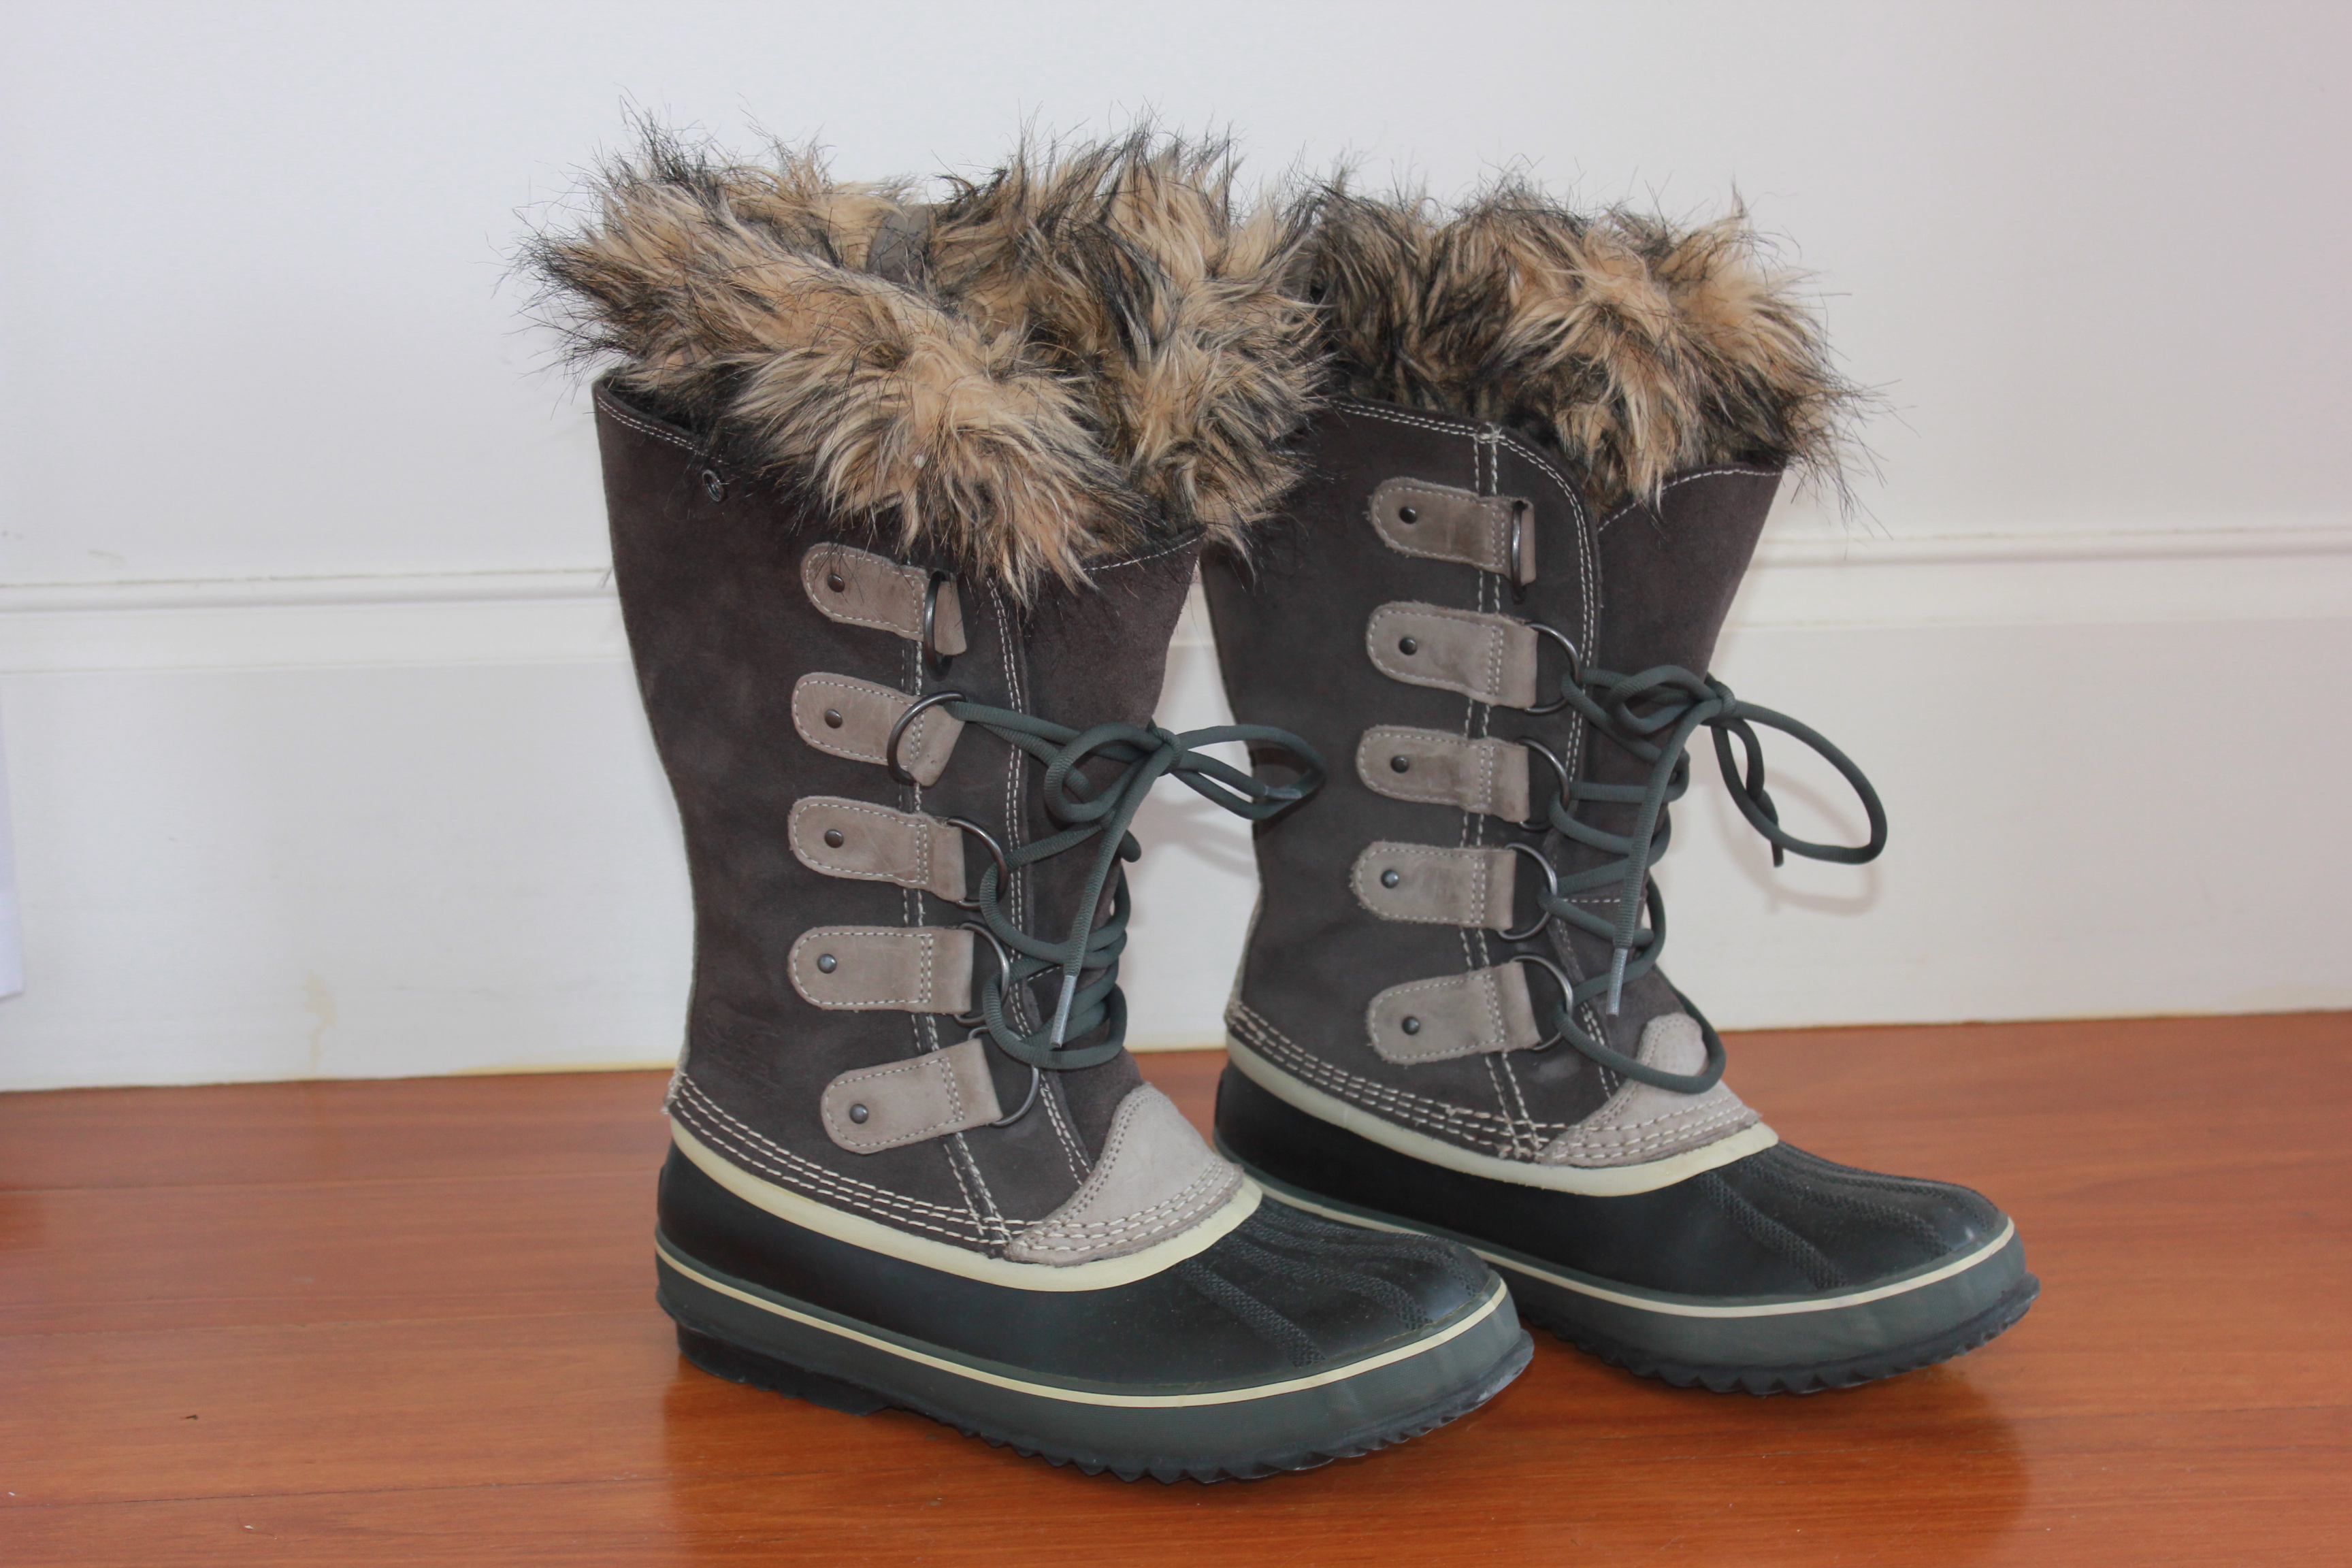 sorel joan of arctic boot liners